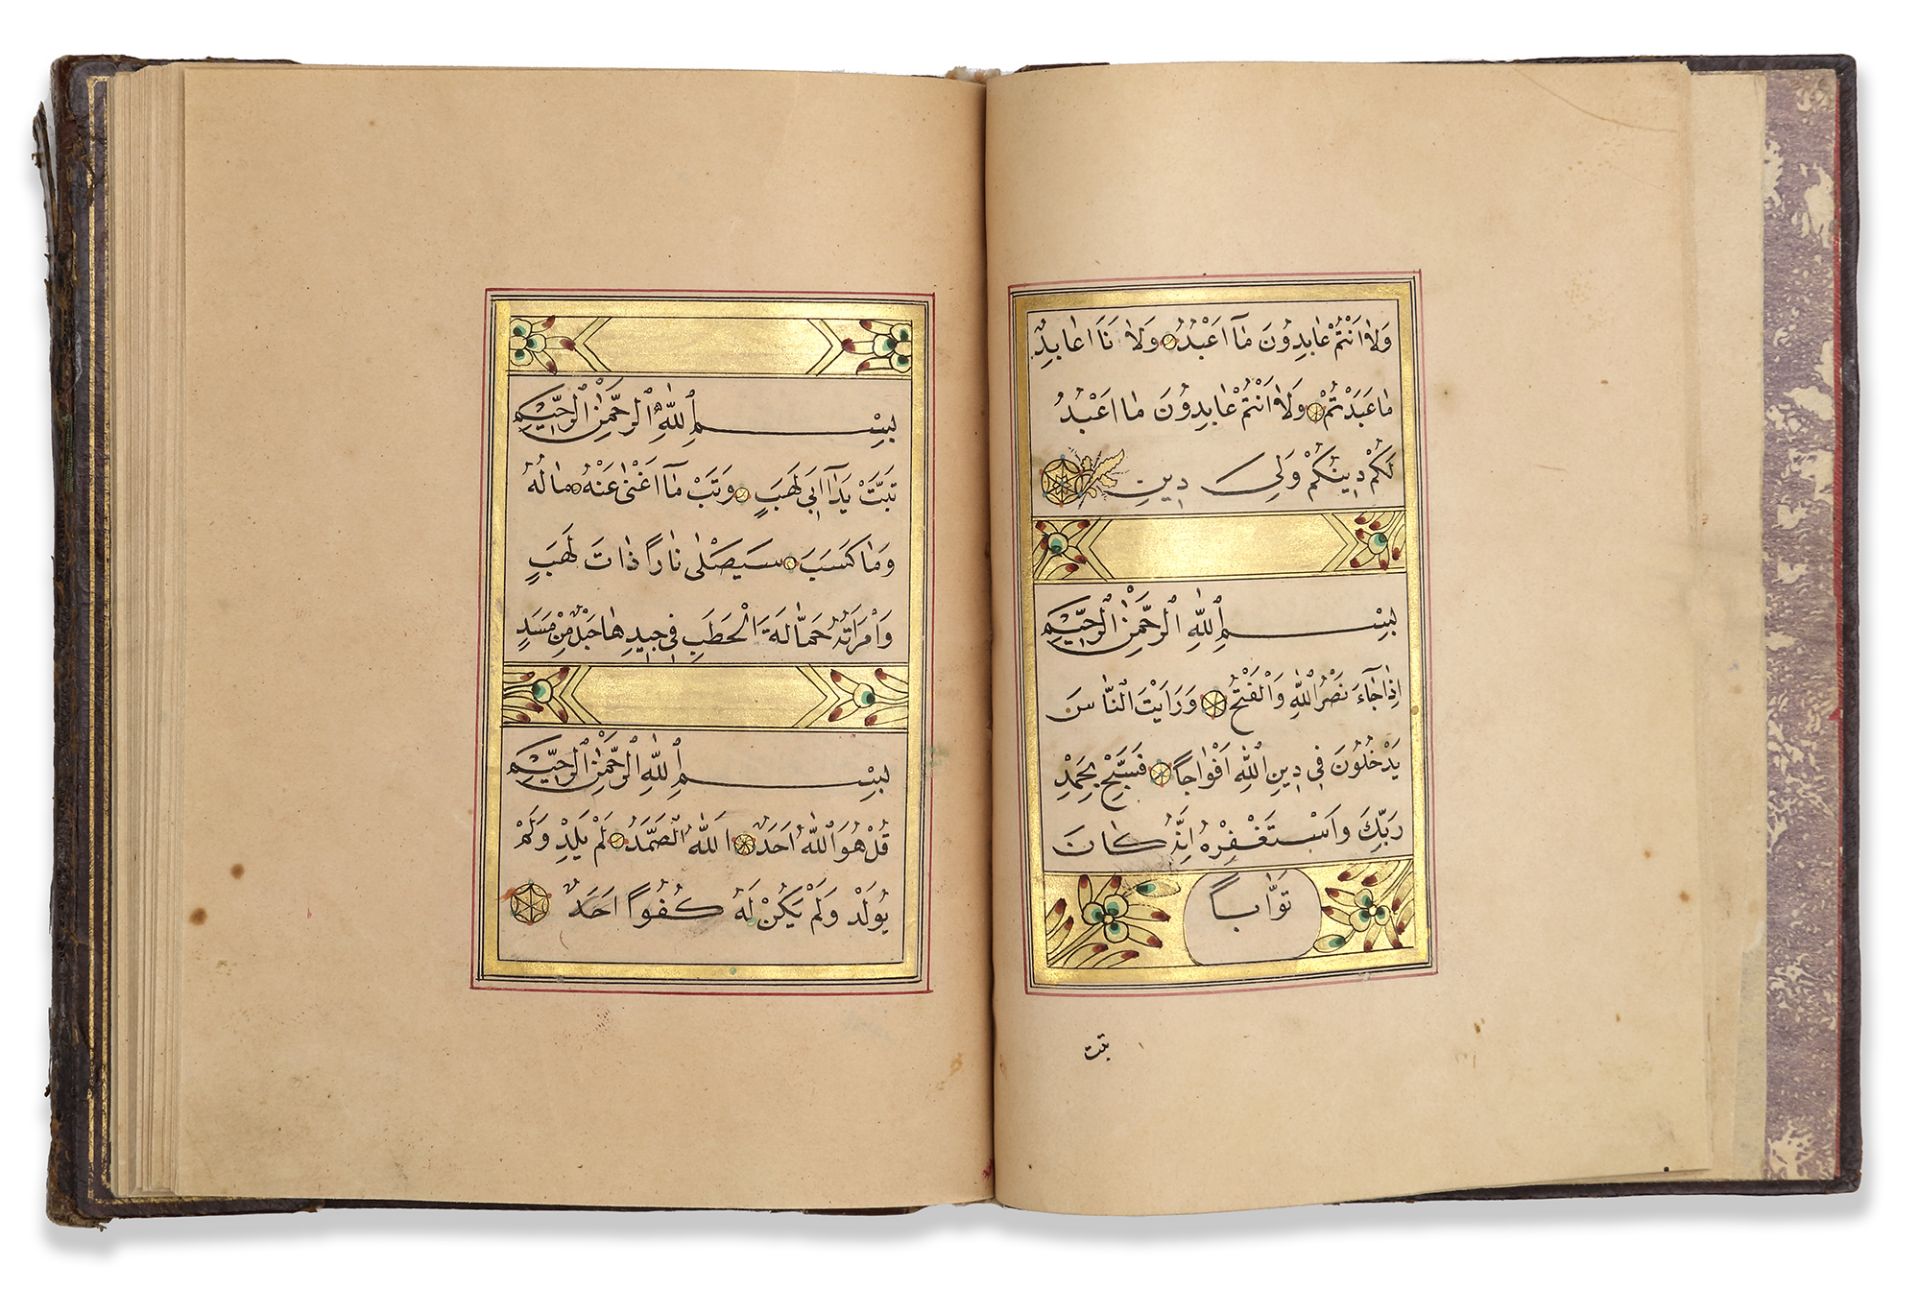 AN OTTOMAN PRAYER BOOK BY MEHMED ARIF EFENDI, 1266 AH/1849 AD - Image 2 of 3